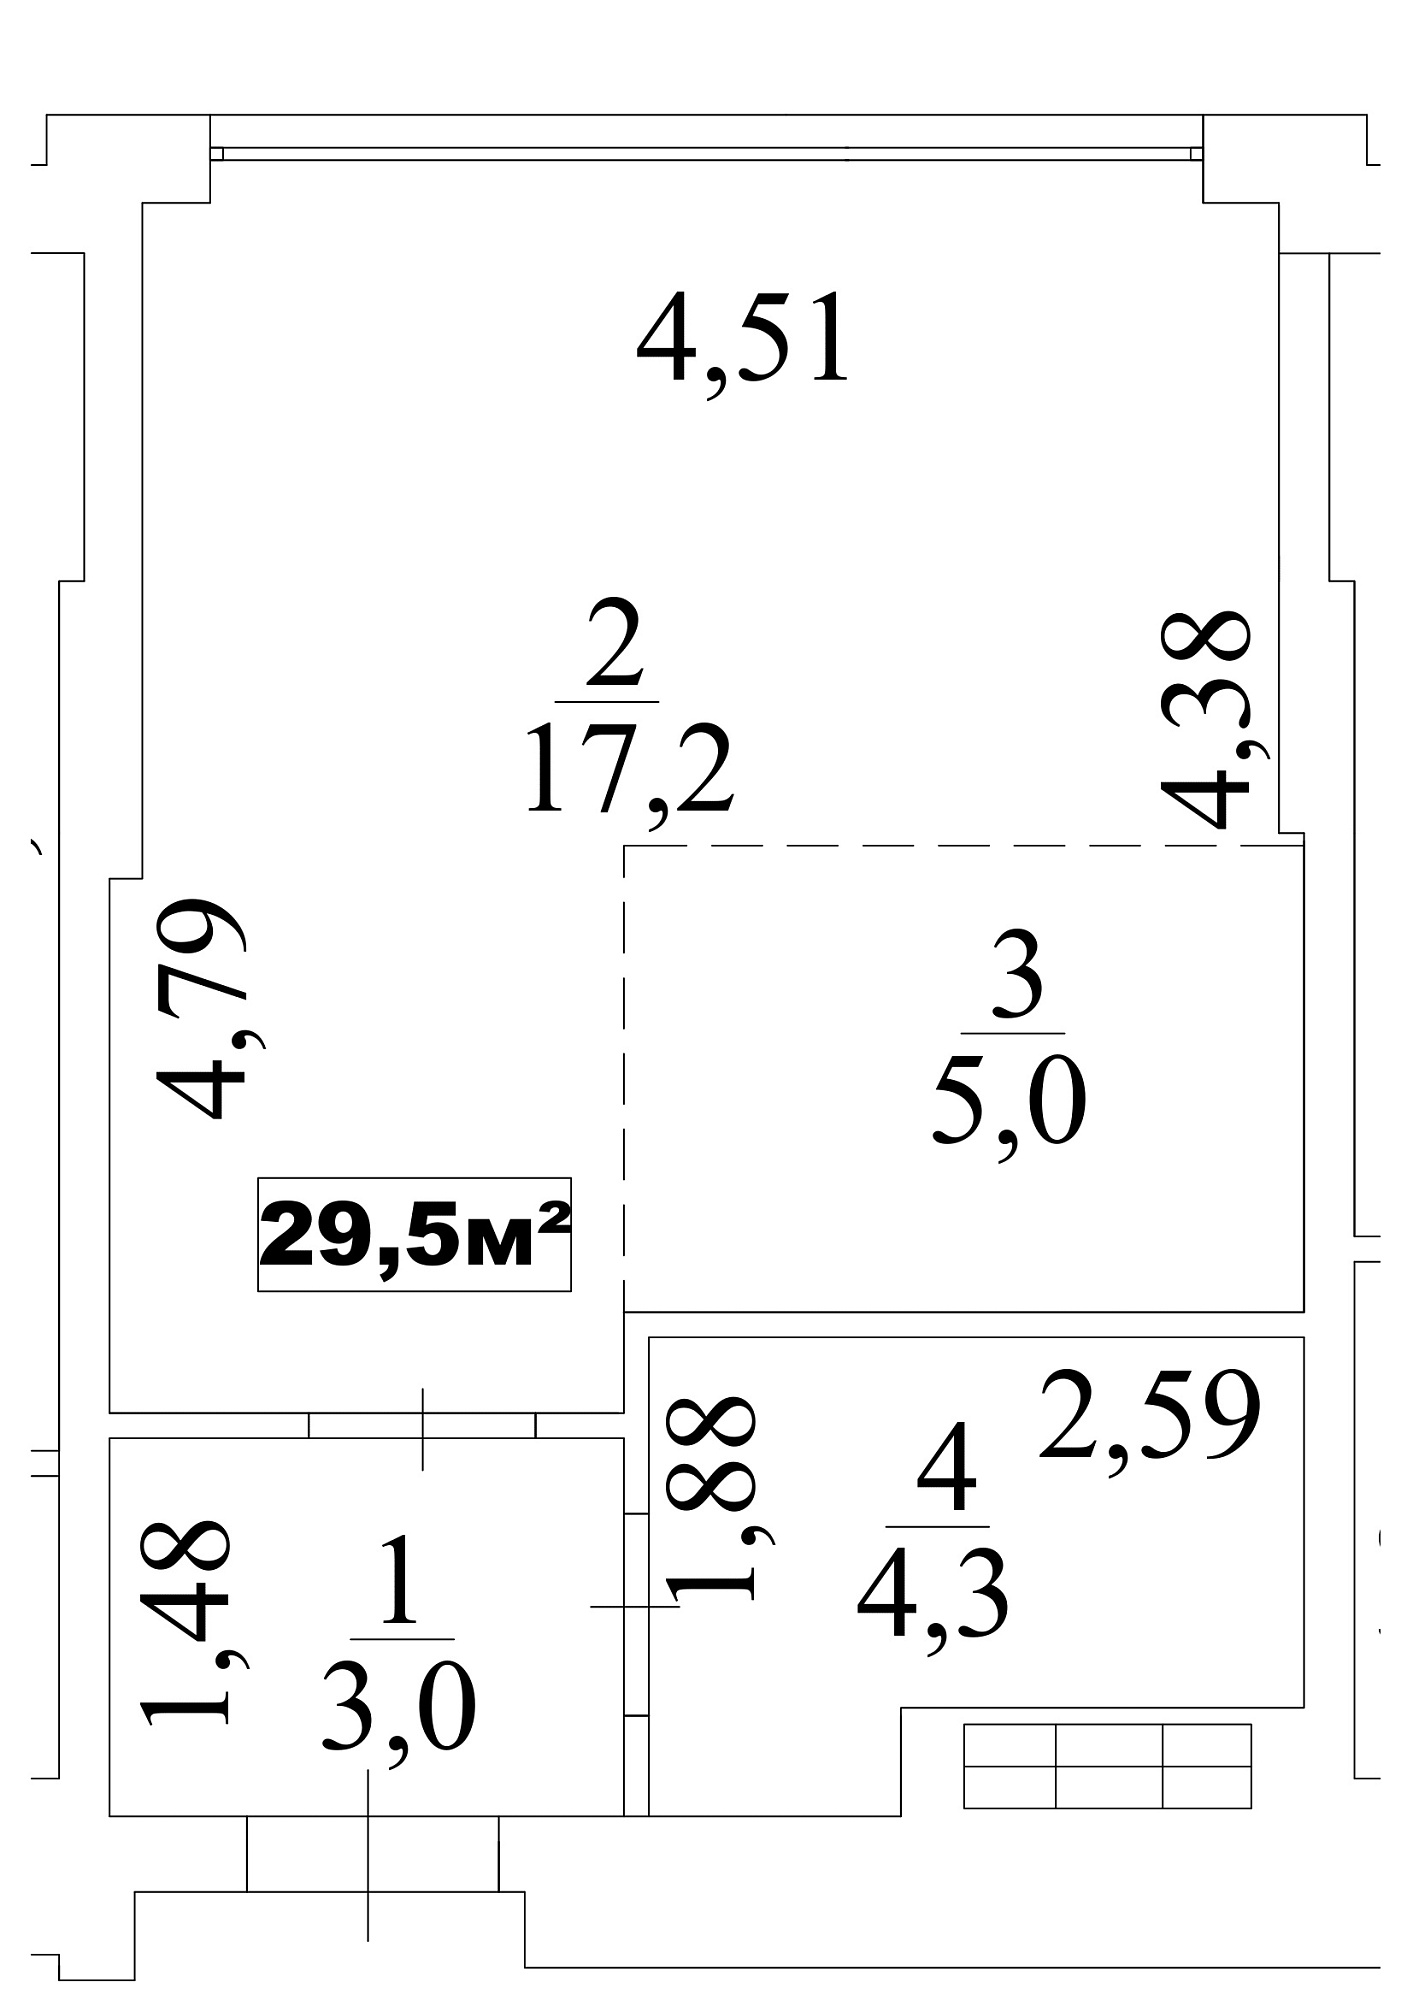 Planning Smart flats area 29.5m2, AB-10-04/00032.